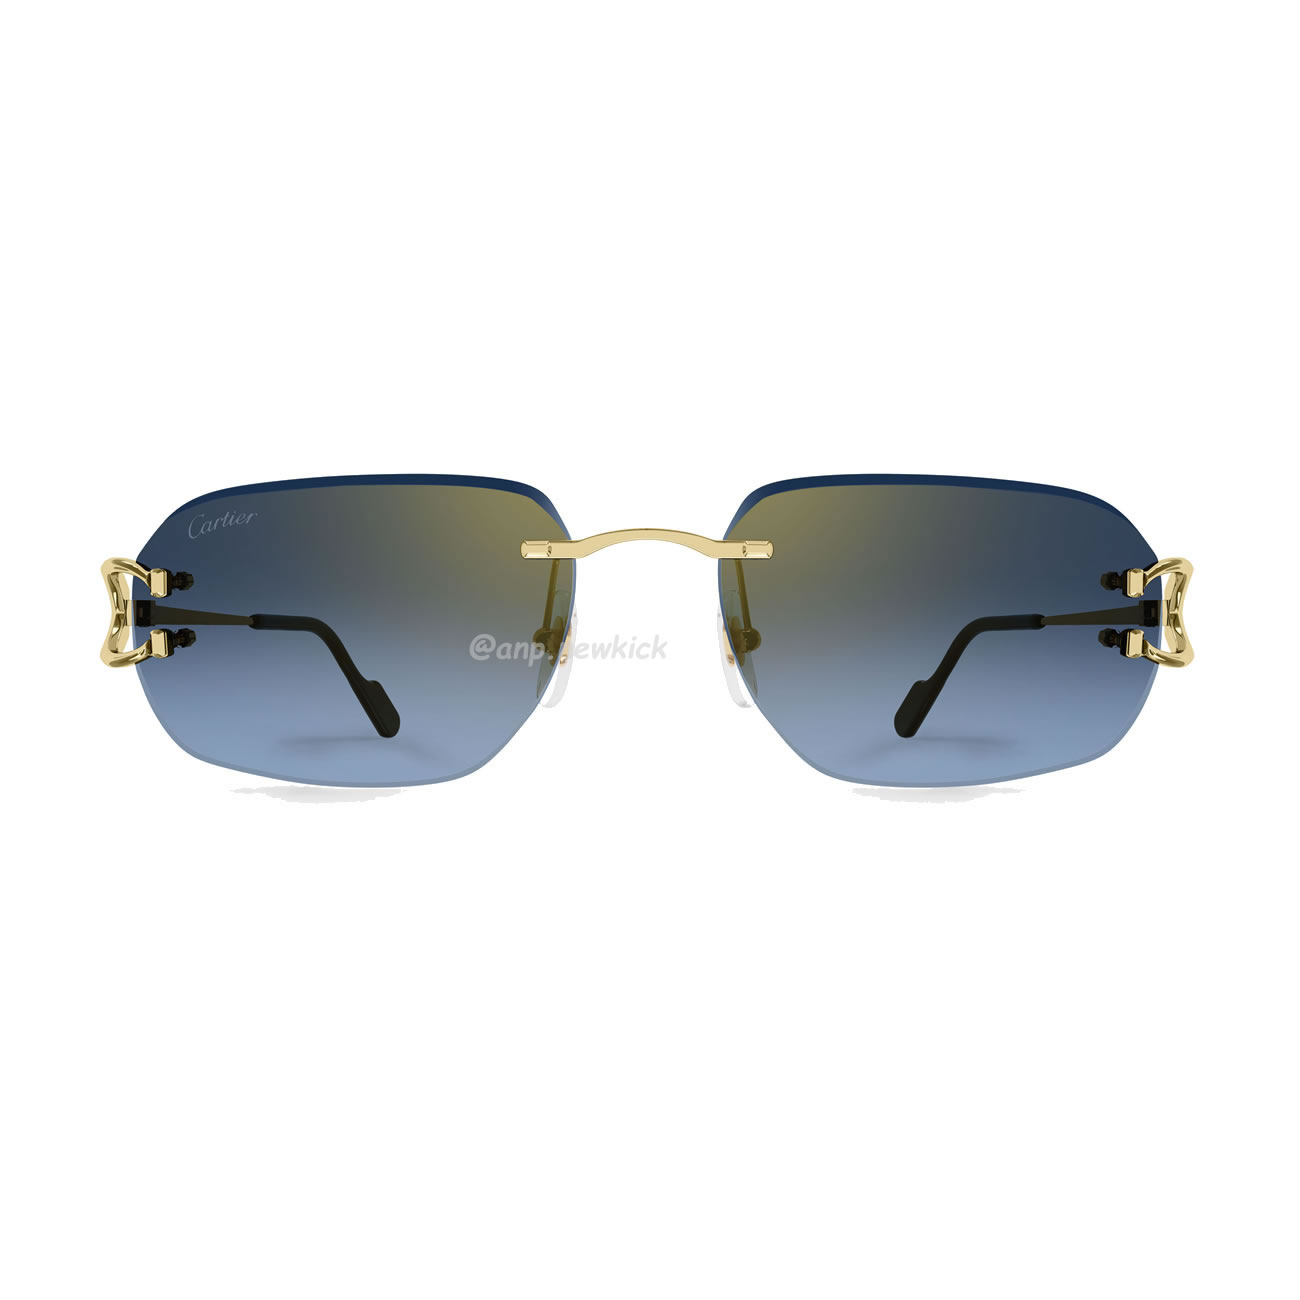 Cartier Eyewear Rimless Rectangle Frame Sunglasses (7) - newkick.org